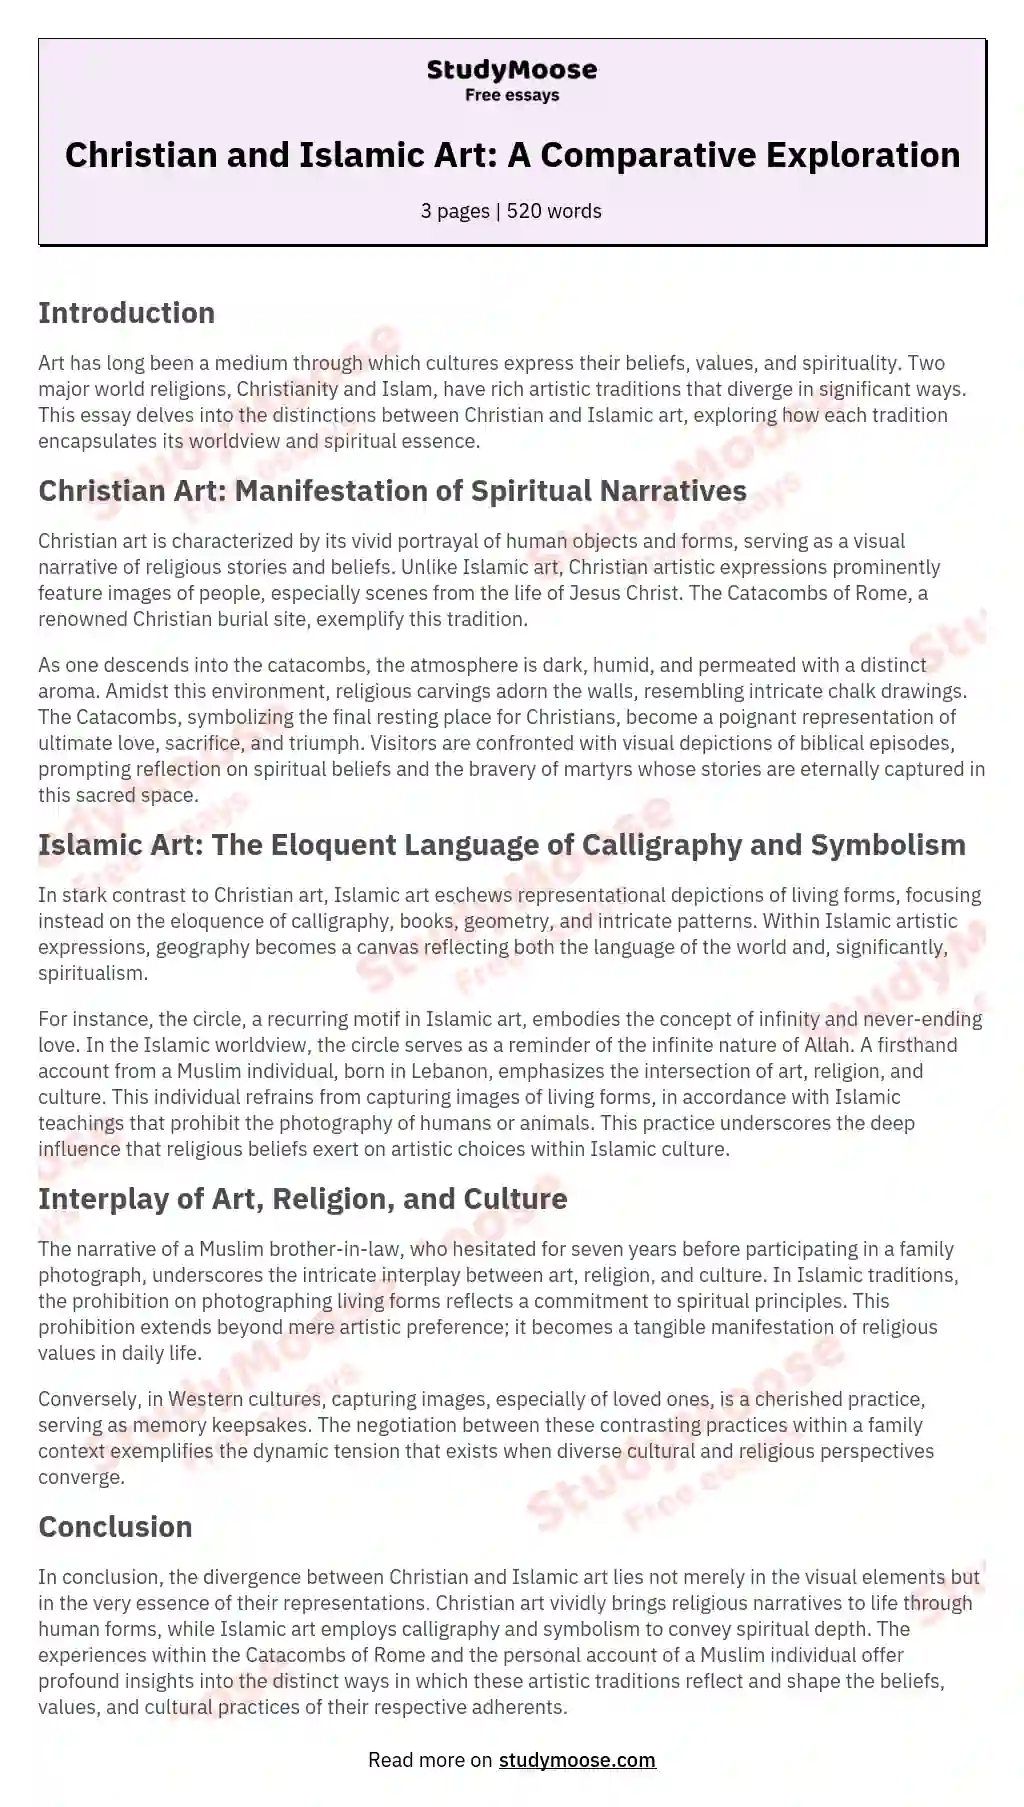 Christian and Islamic Art: A Comparative Exploration essay